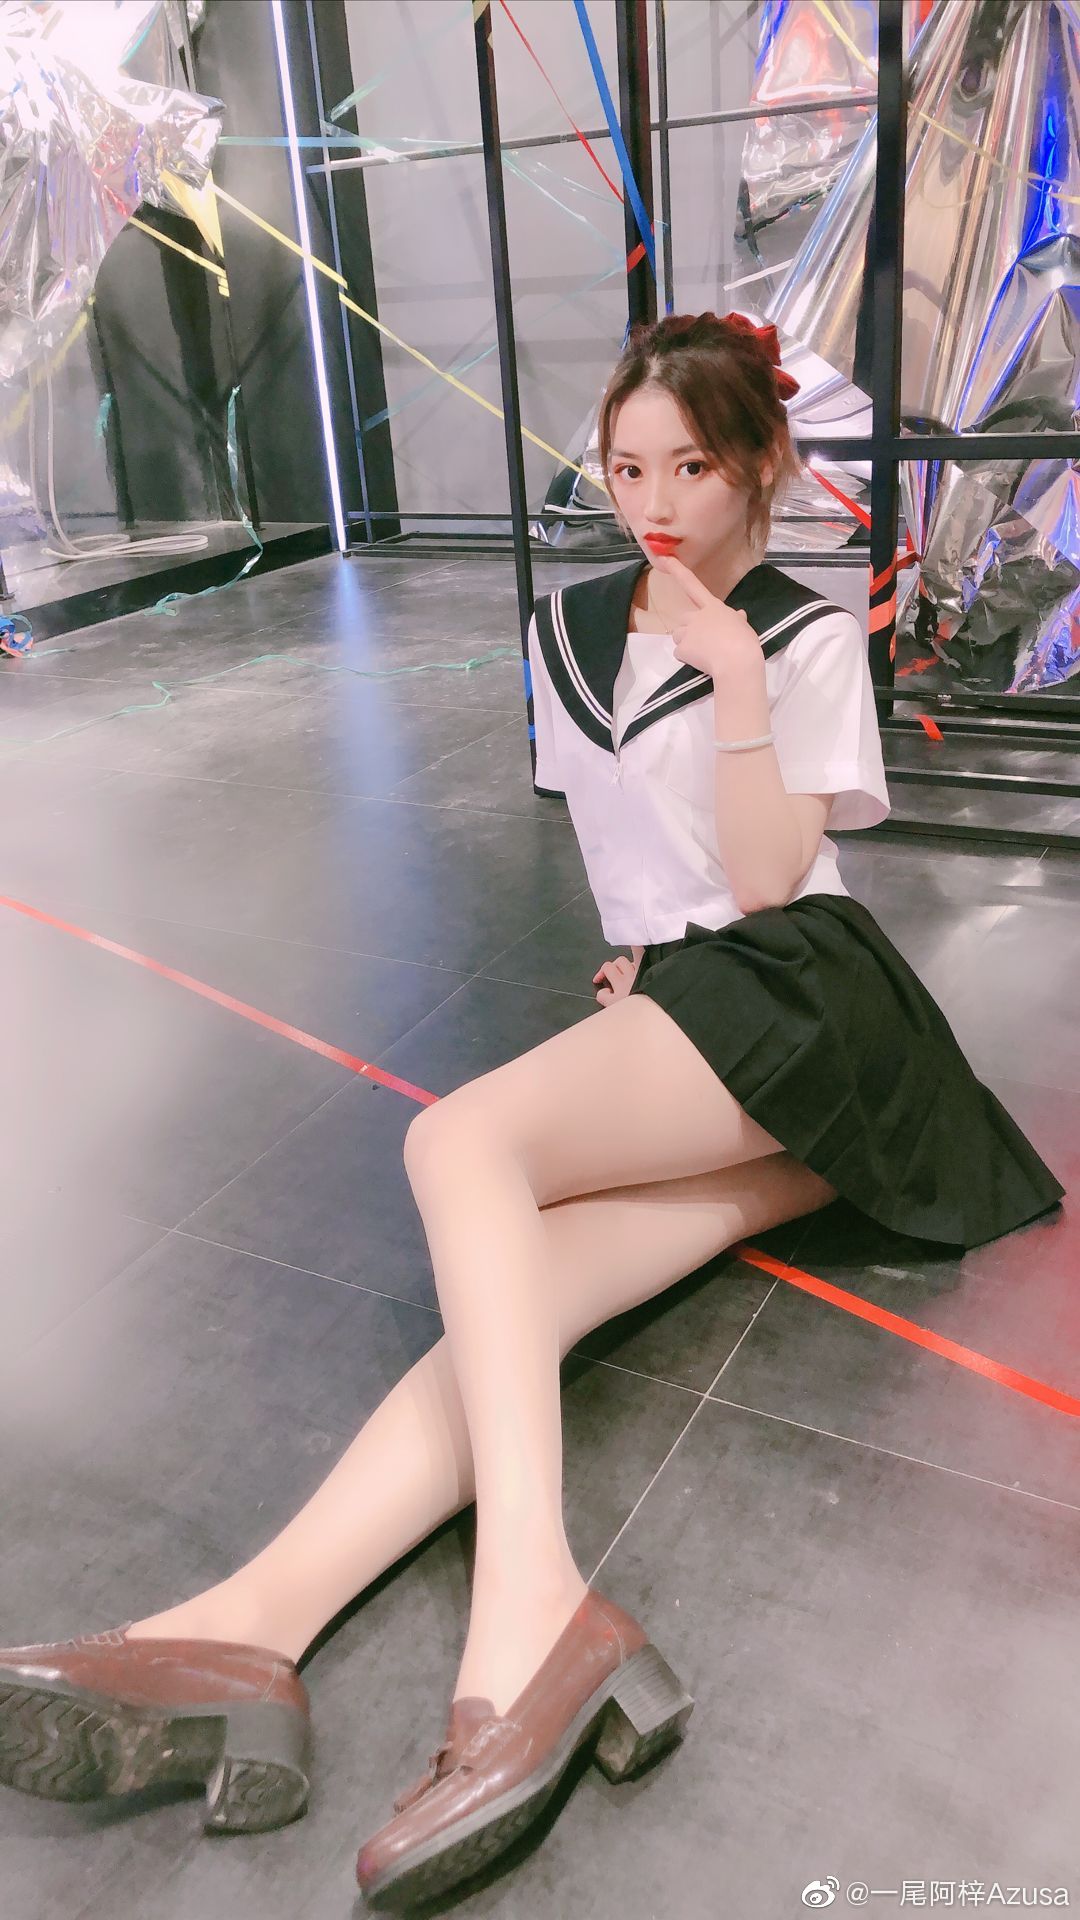 Azusa Weibo may 1513, 2019